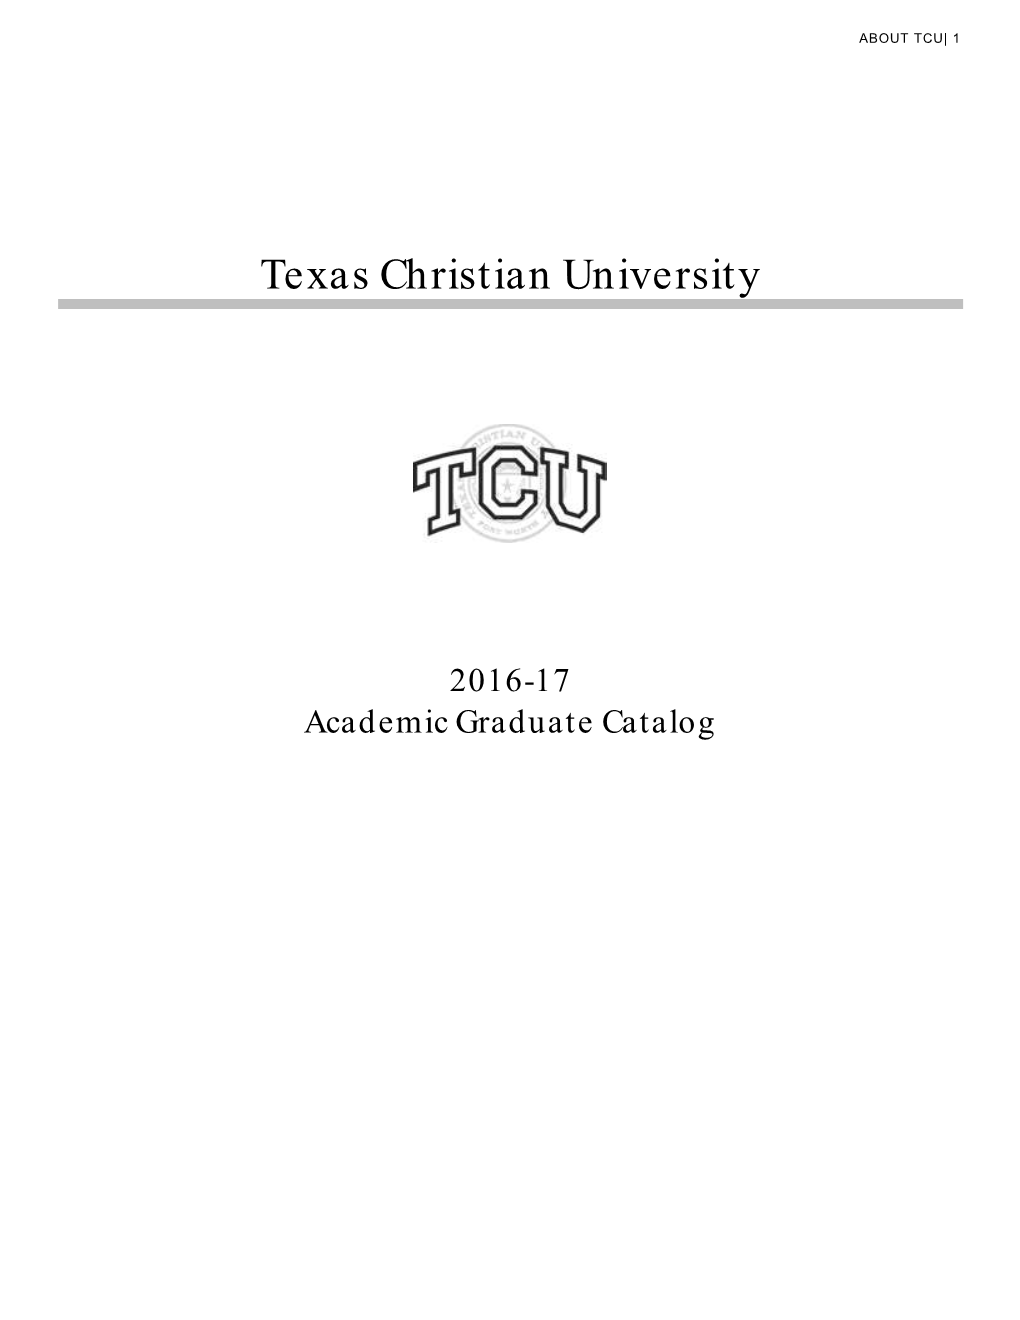 TCU Graduate Catalog 2016-17